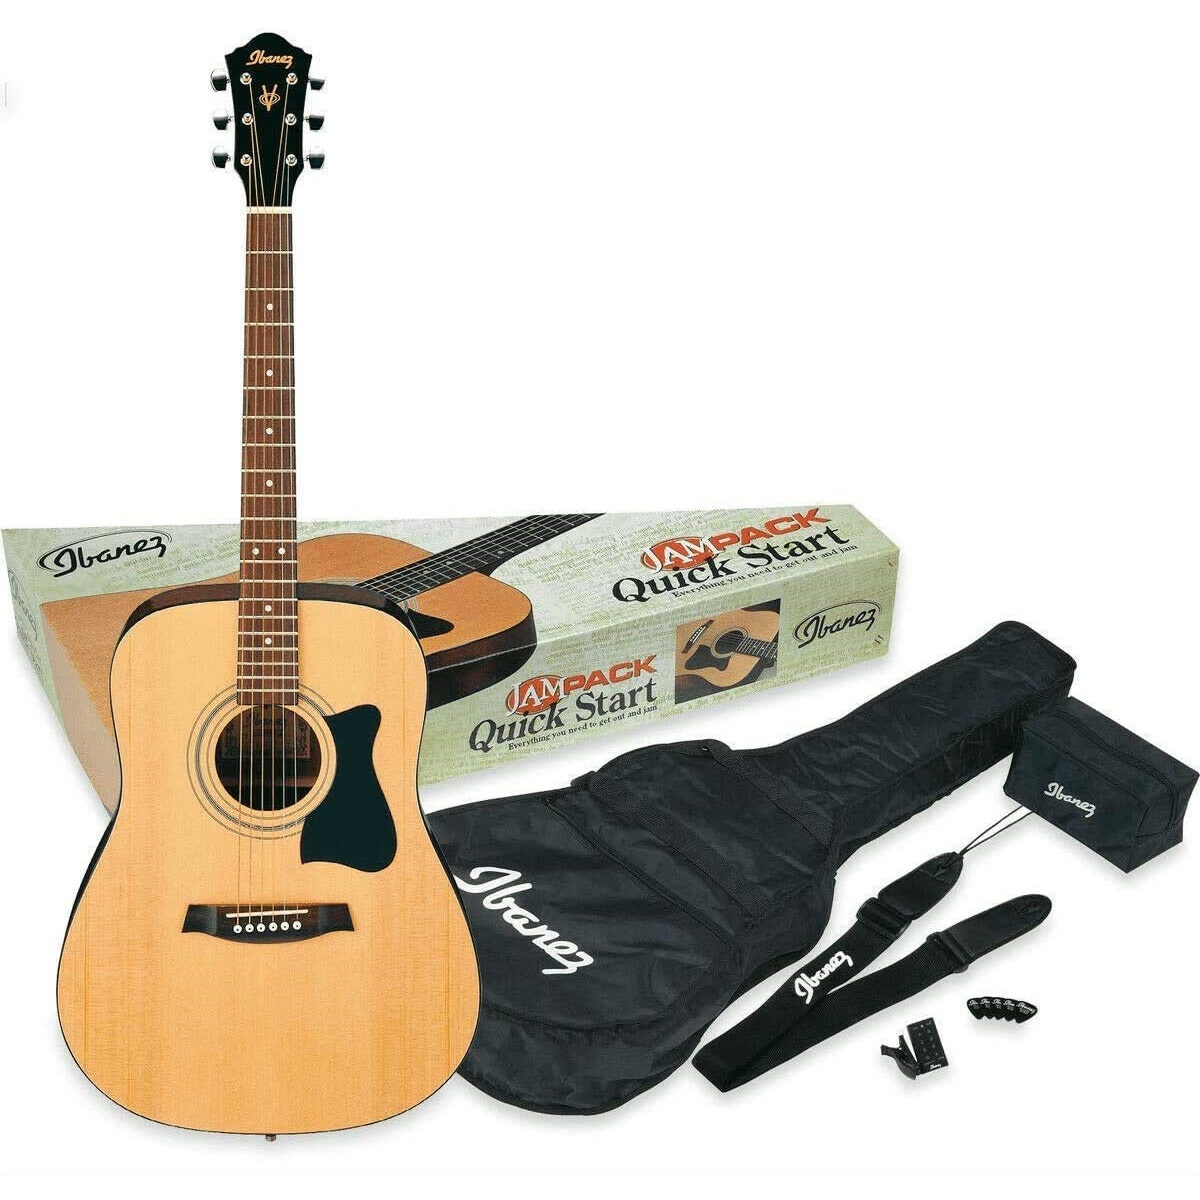 Buy Ibanez V50njp acoustic guitar online price in india review